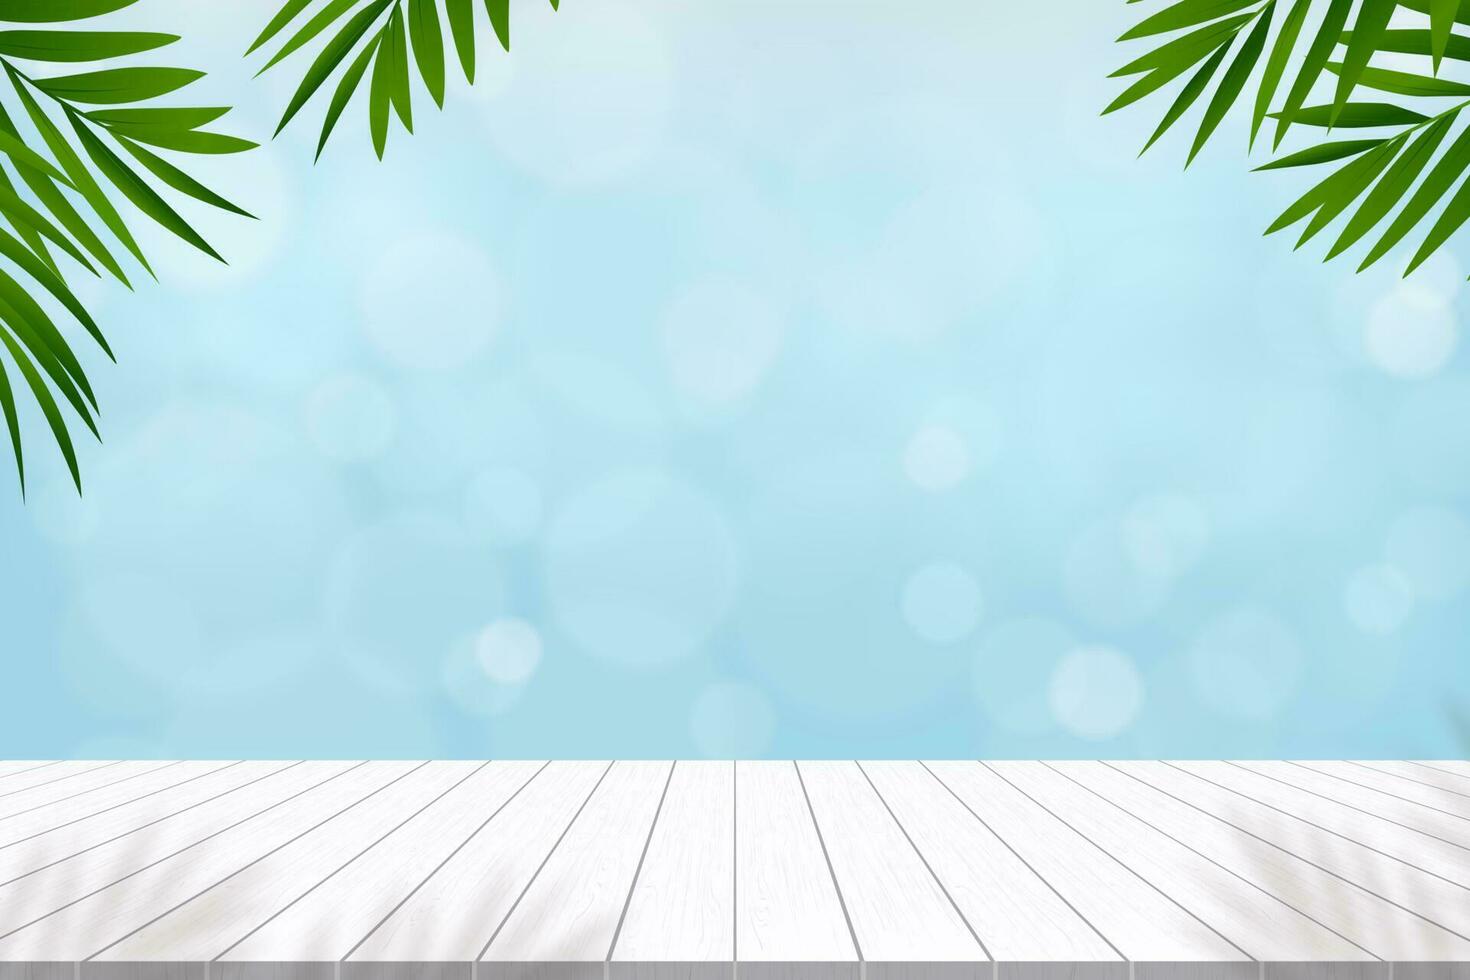 madera mesa parte superior y Coco palma hojas en azul ligero borroso bokeh antecedentes usado para montaje o monitor producto.vector estudio antecedentes perspectiva de madera terraza textura para verano producto regalos vector